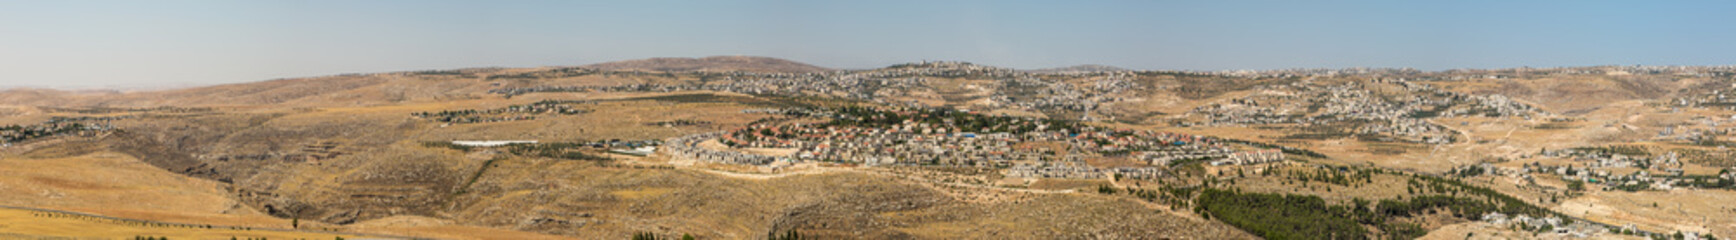 Desert View of Judean desert, Israel